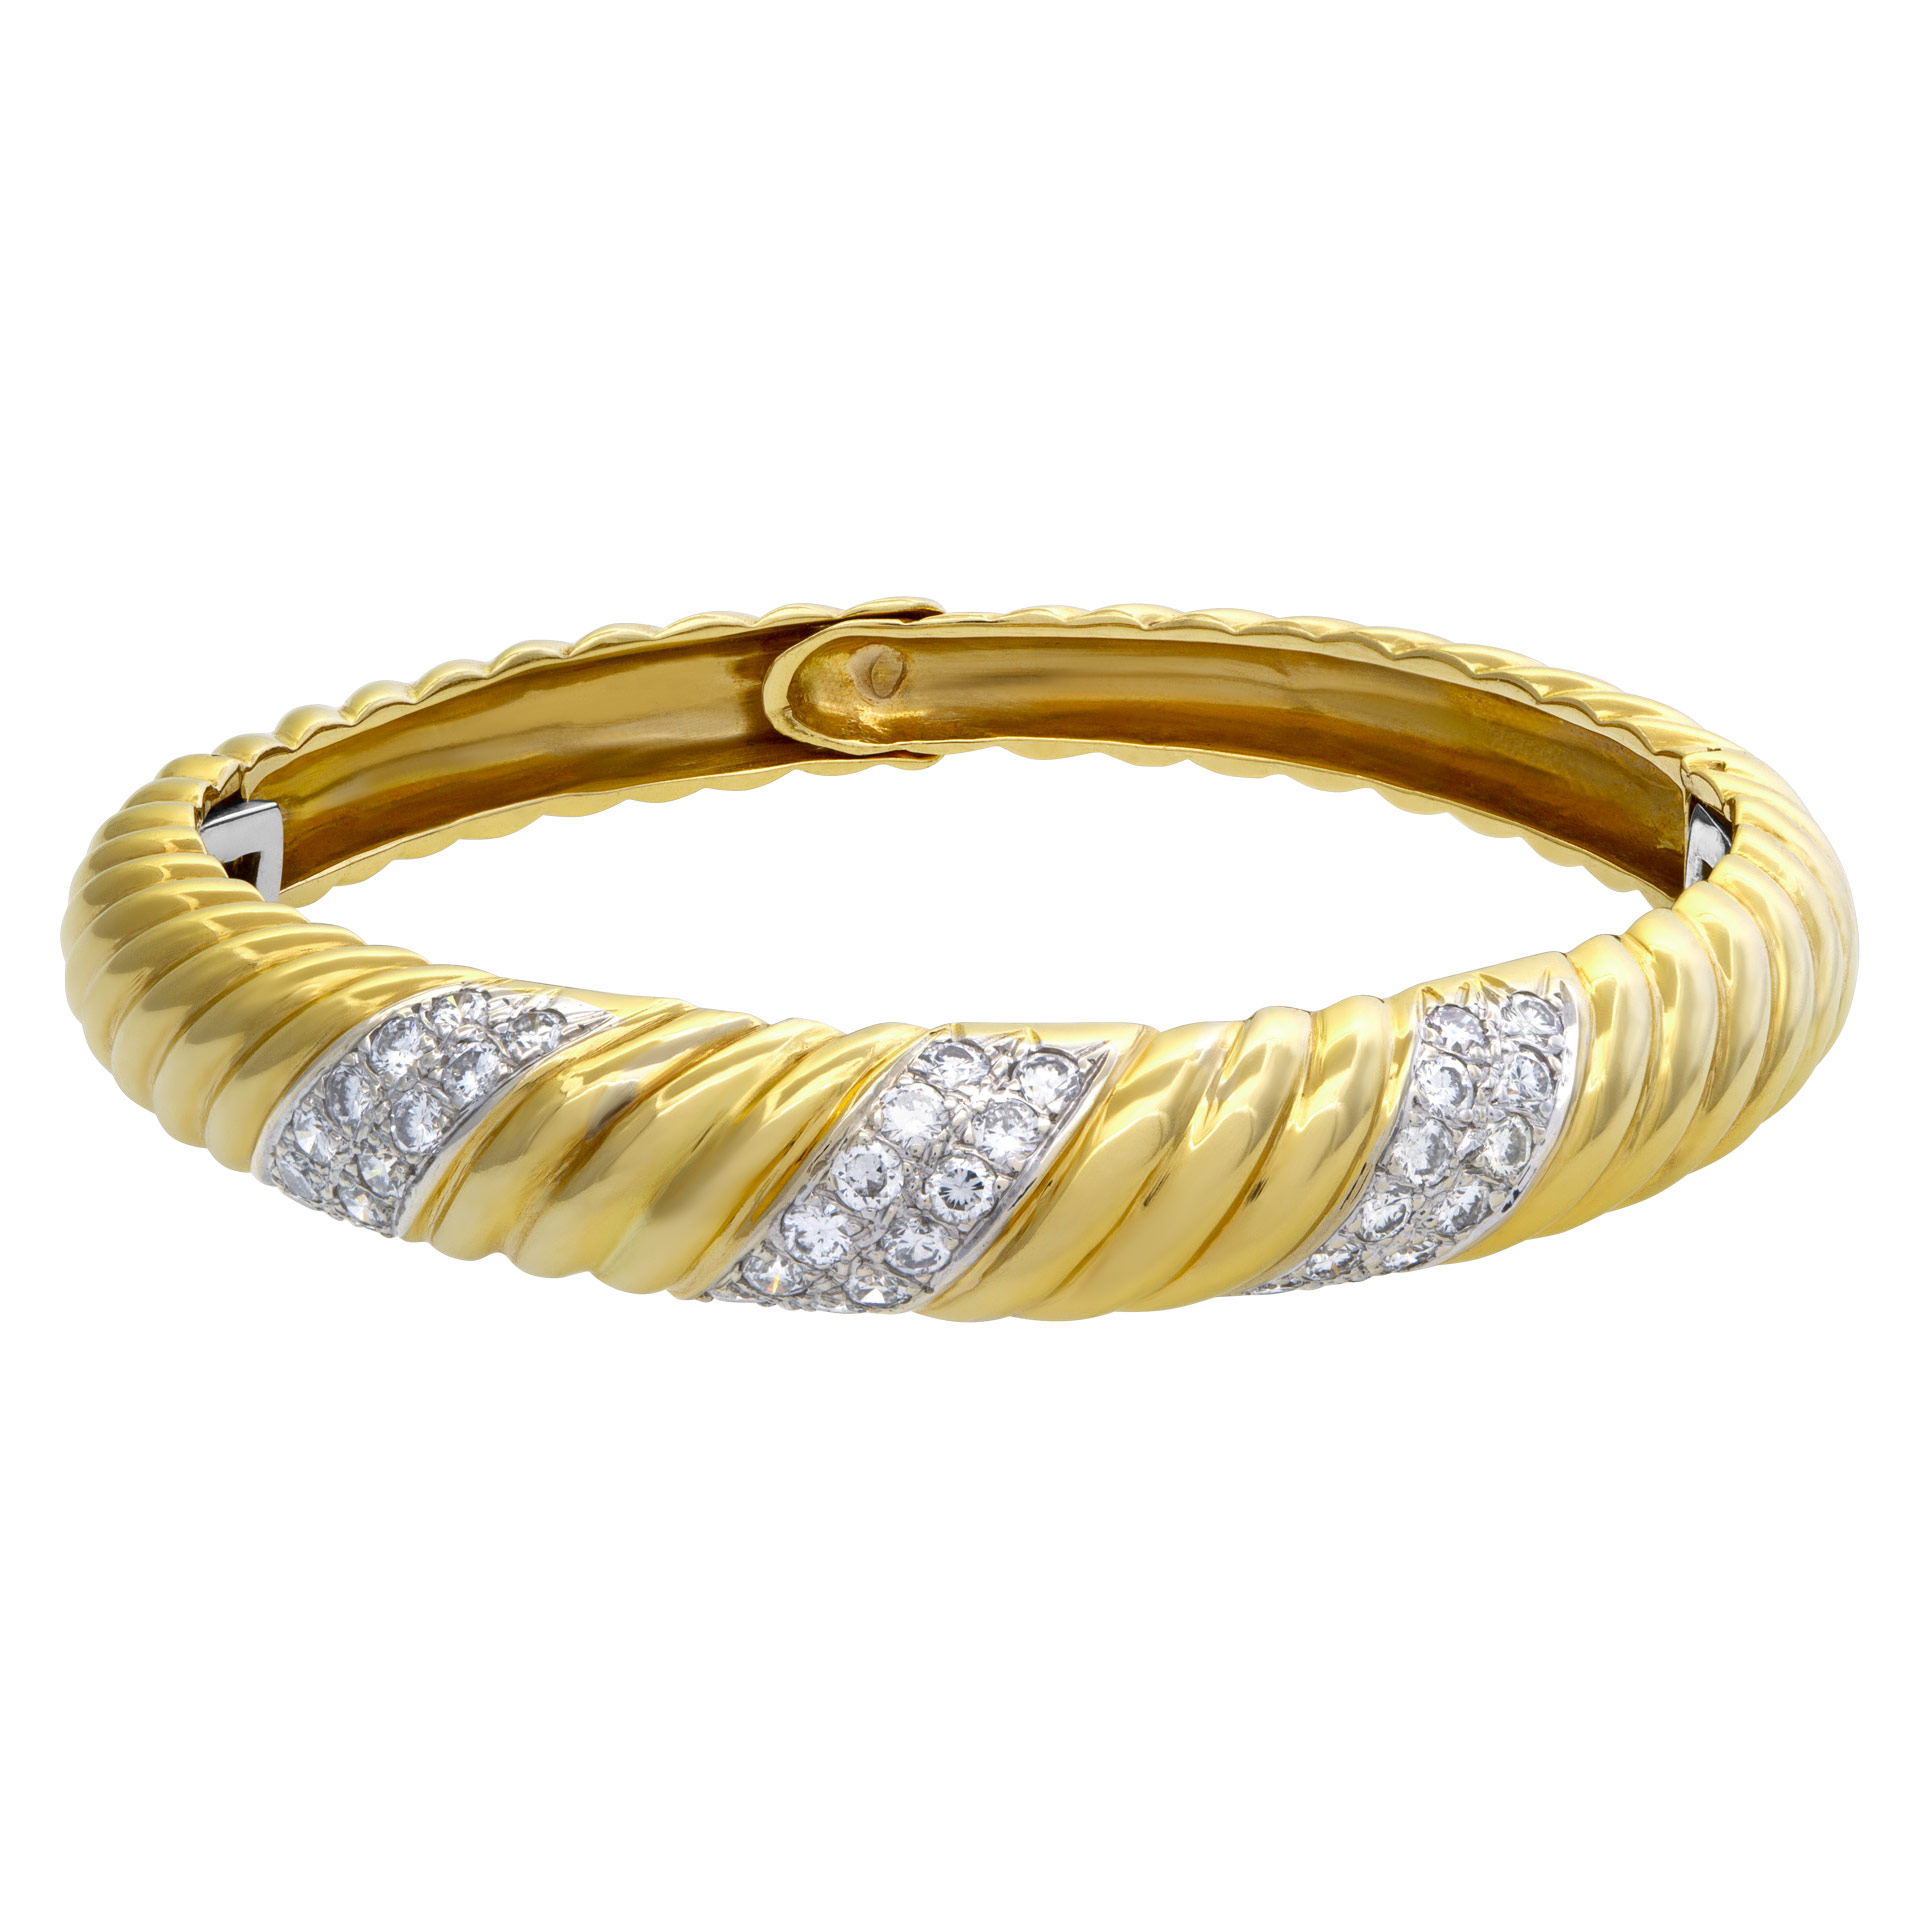 Diamond bangle in 18k yellow gold